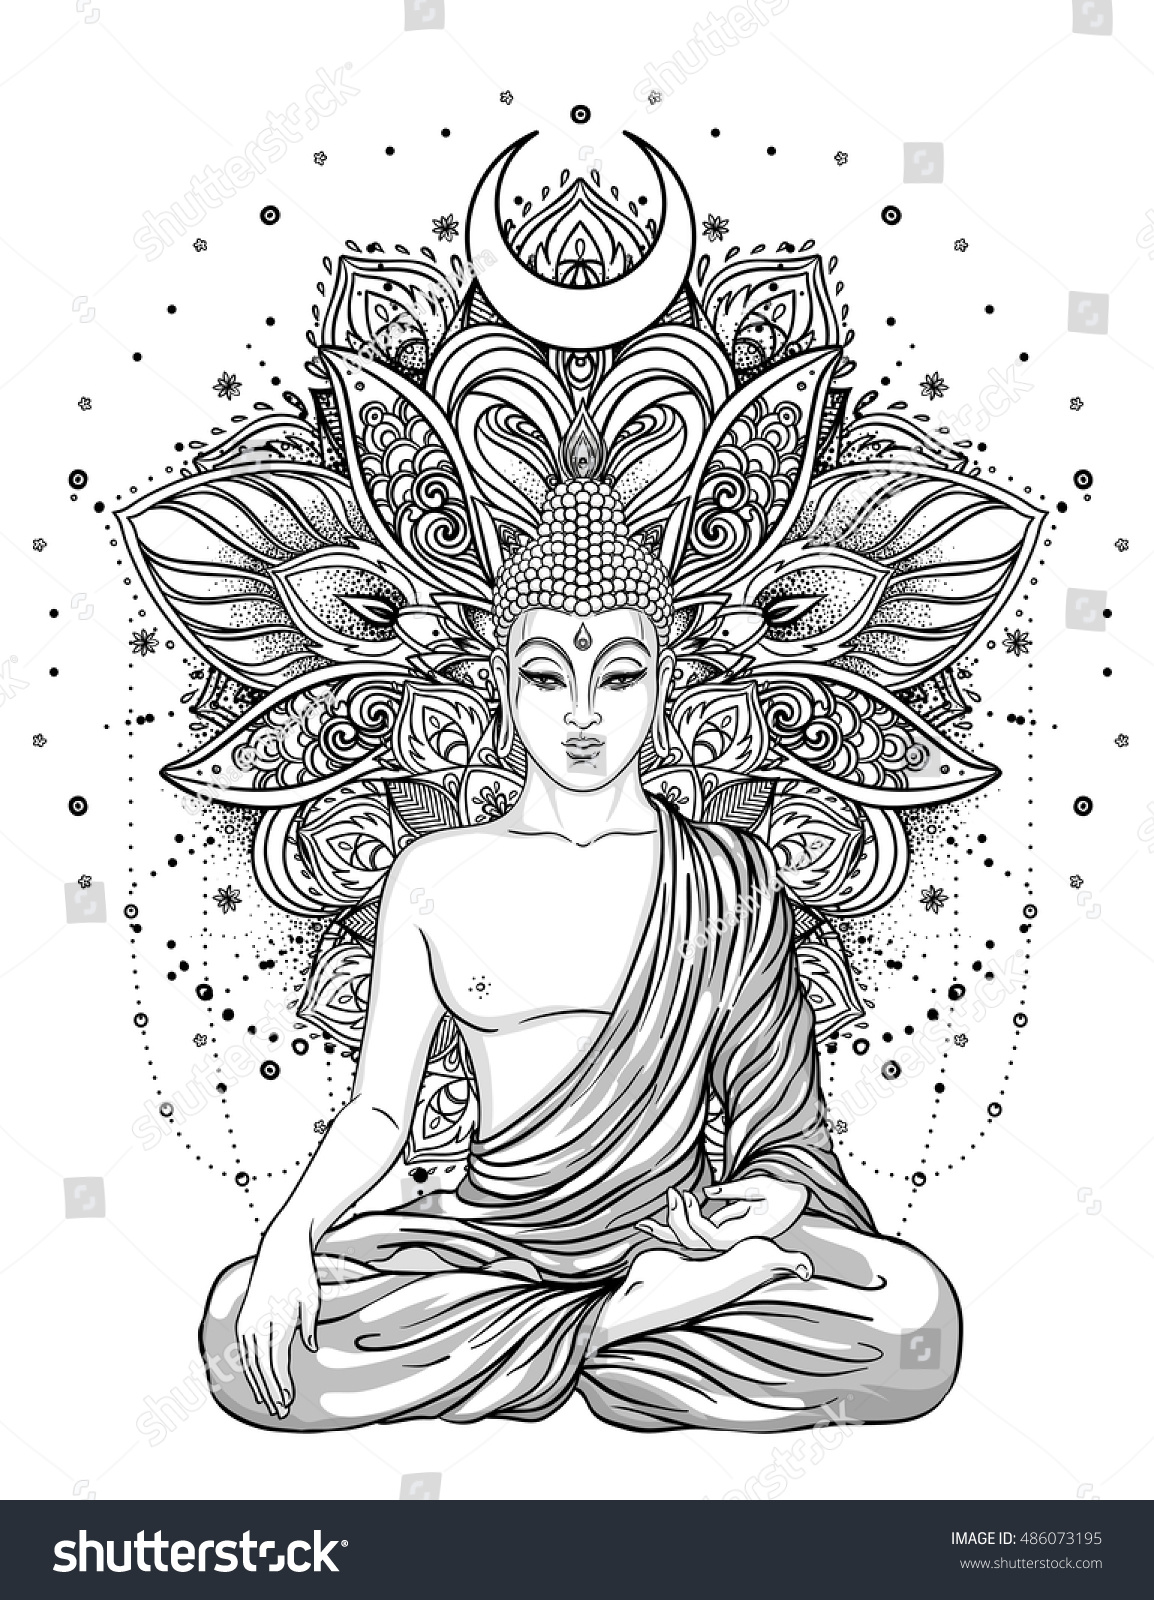 Download Sitting Buddha Statue Over Ornate Mandala Stock Vector 486073195 - Shutterstock